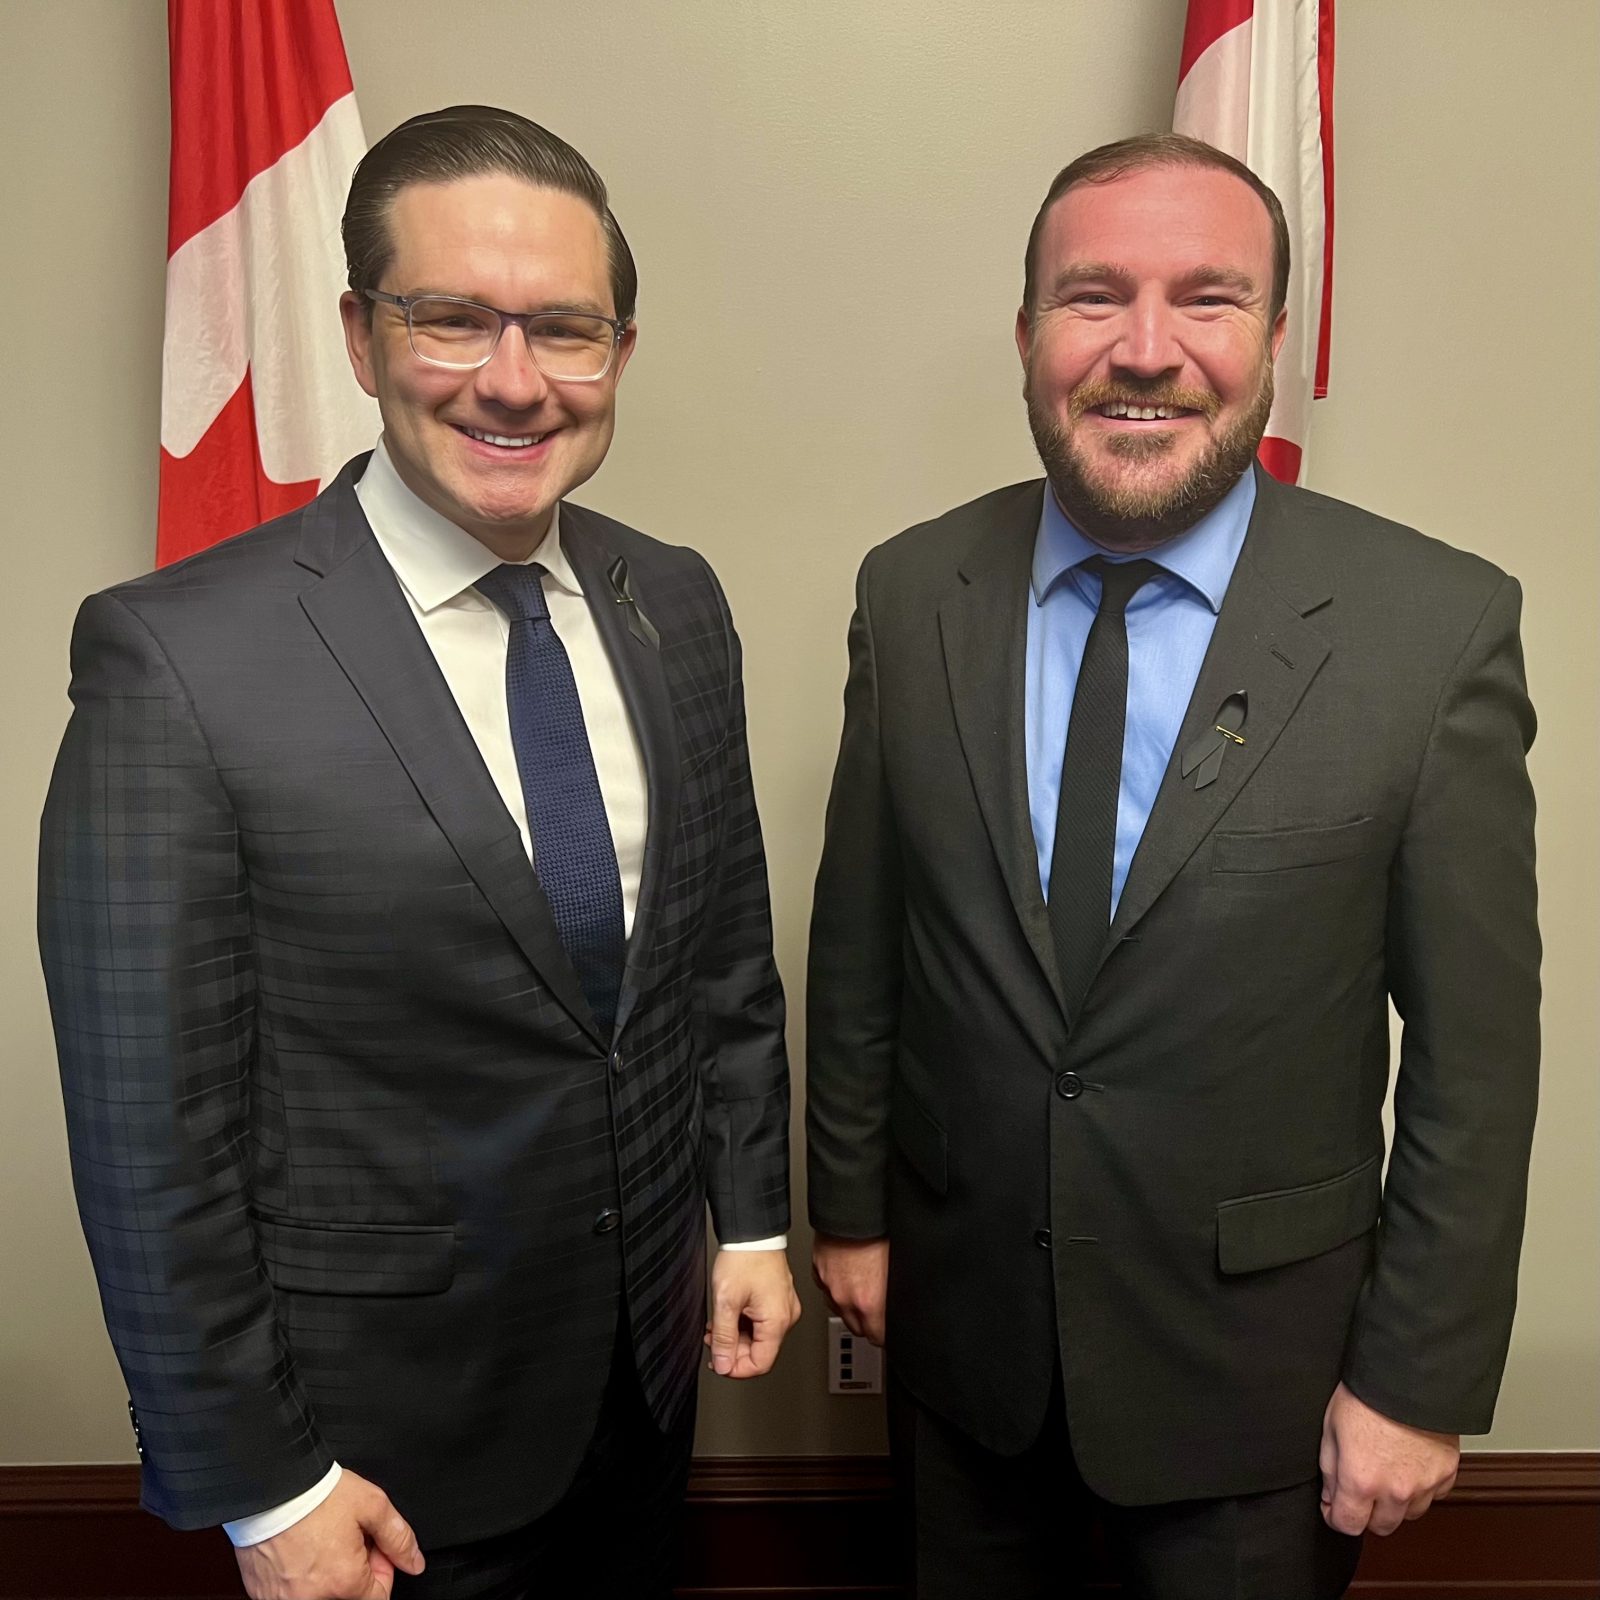 Duncan Returns to Conservative Leadership Team in Ottawa